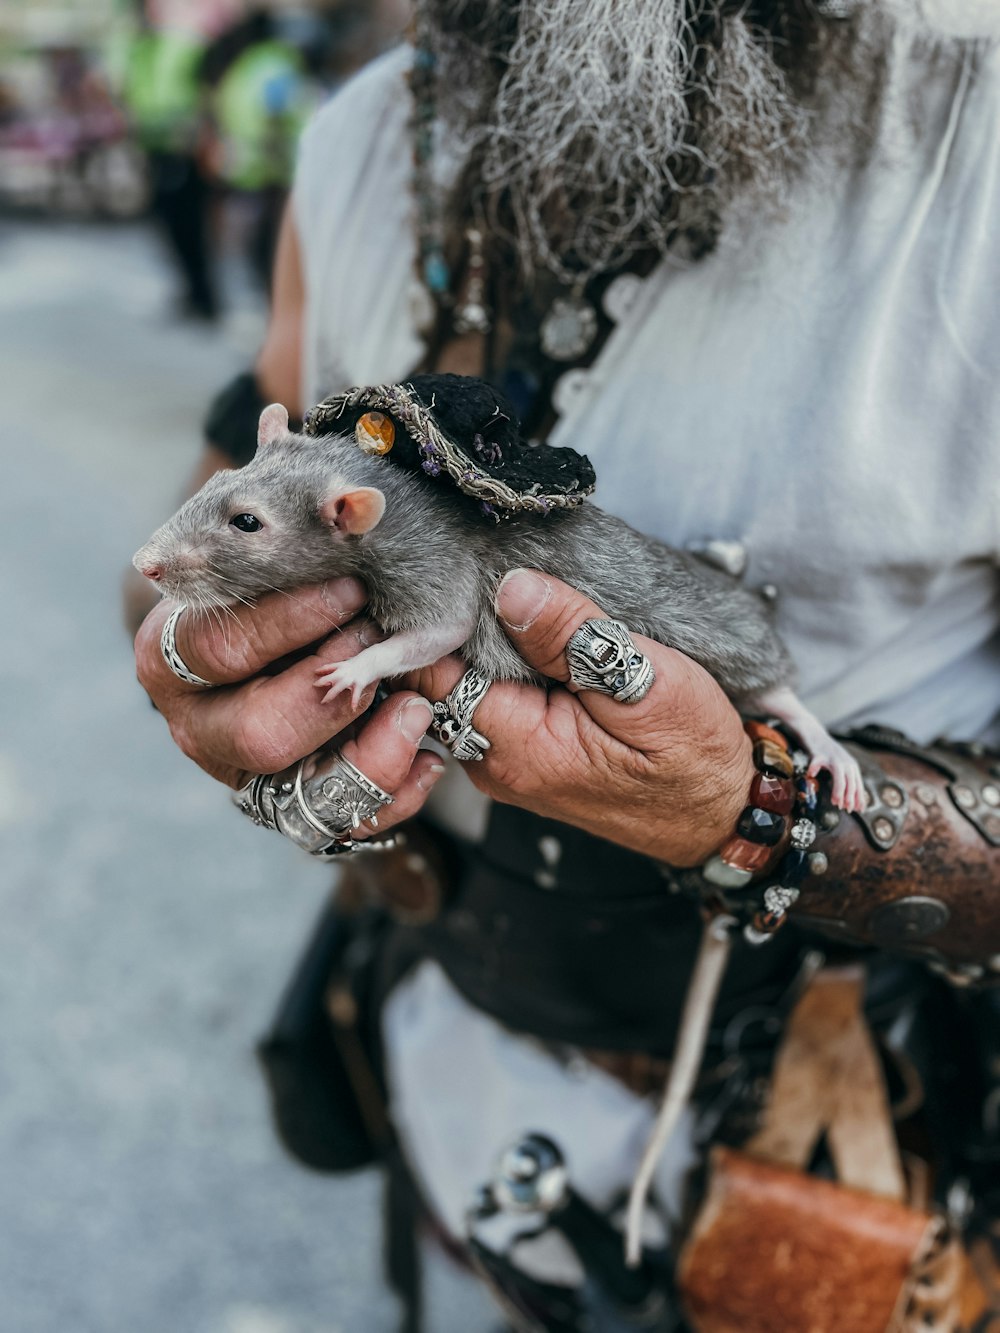 Un homme tenant un rat dans sa main